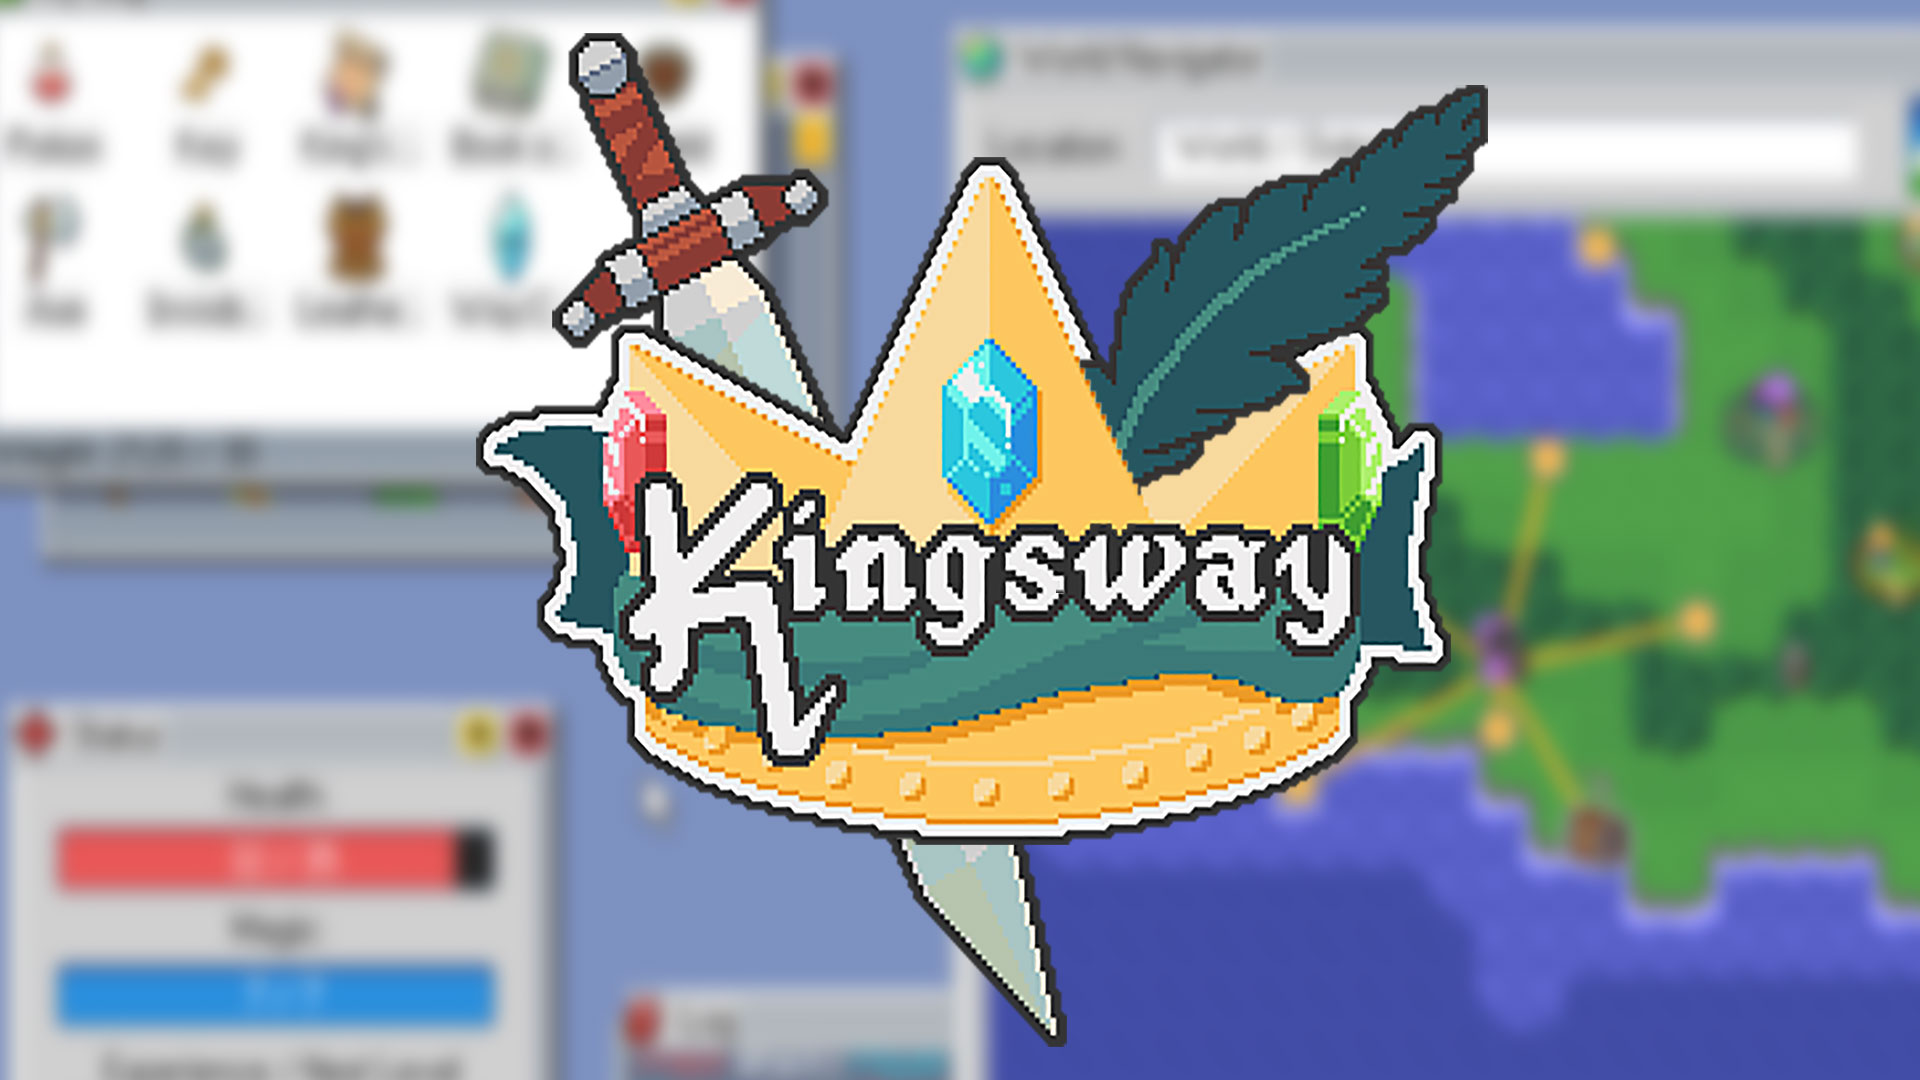 Kingsway Release Trailer